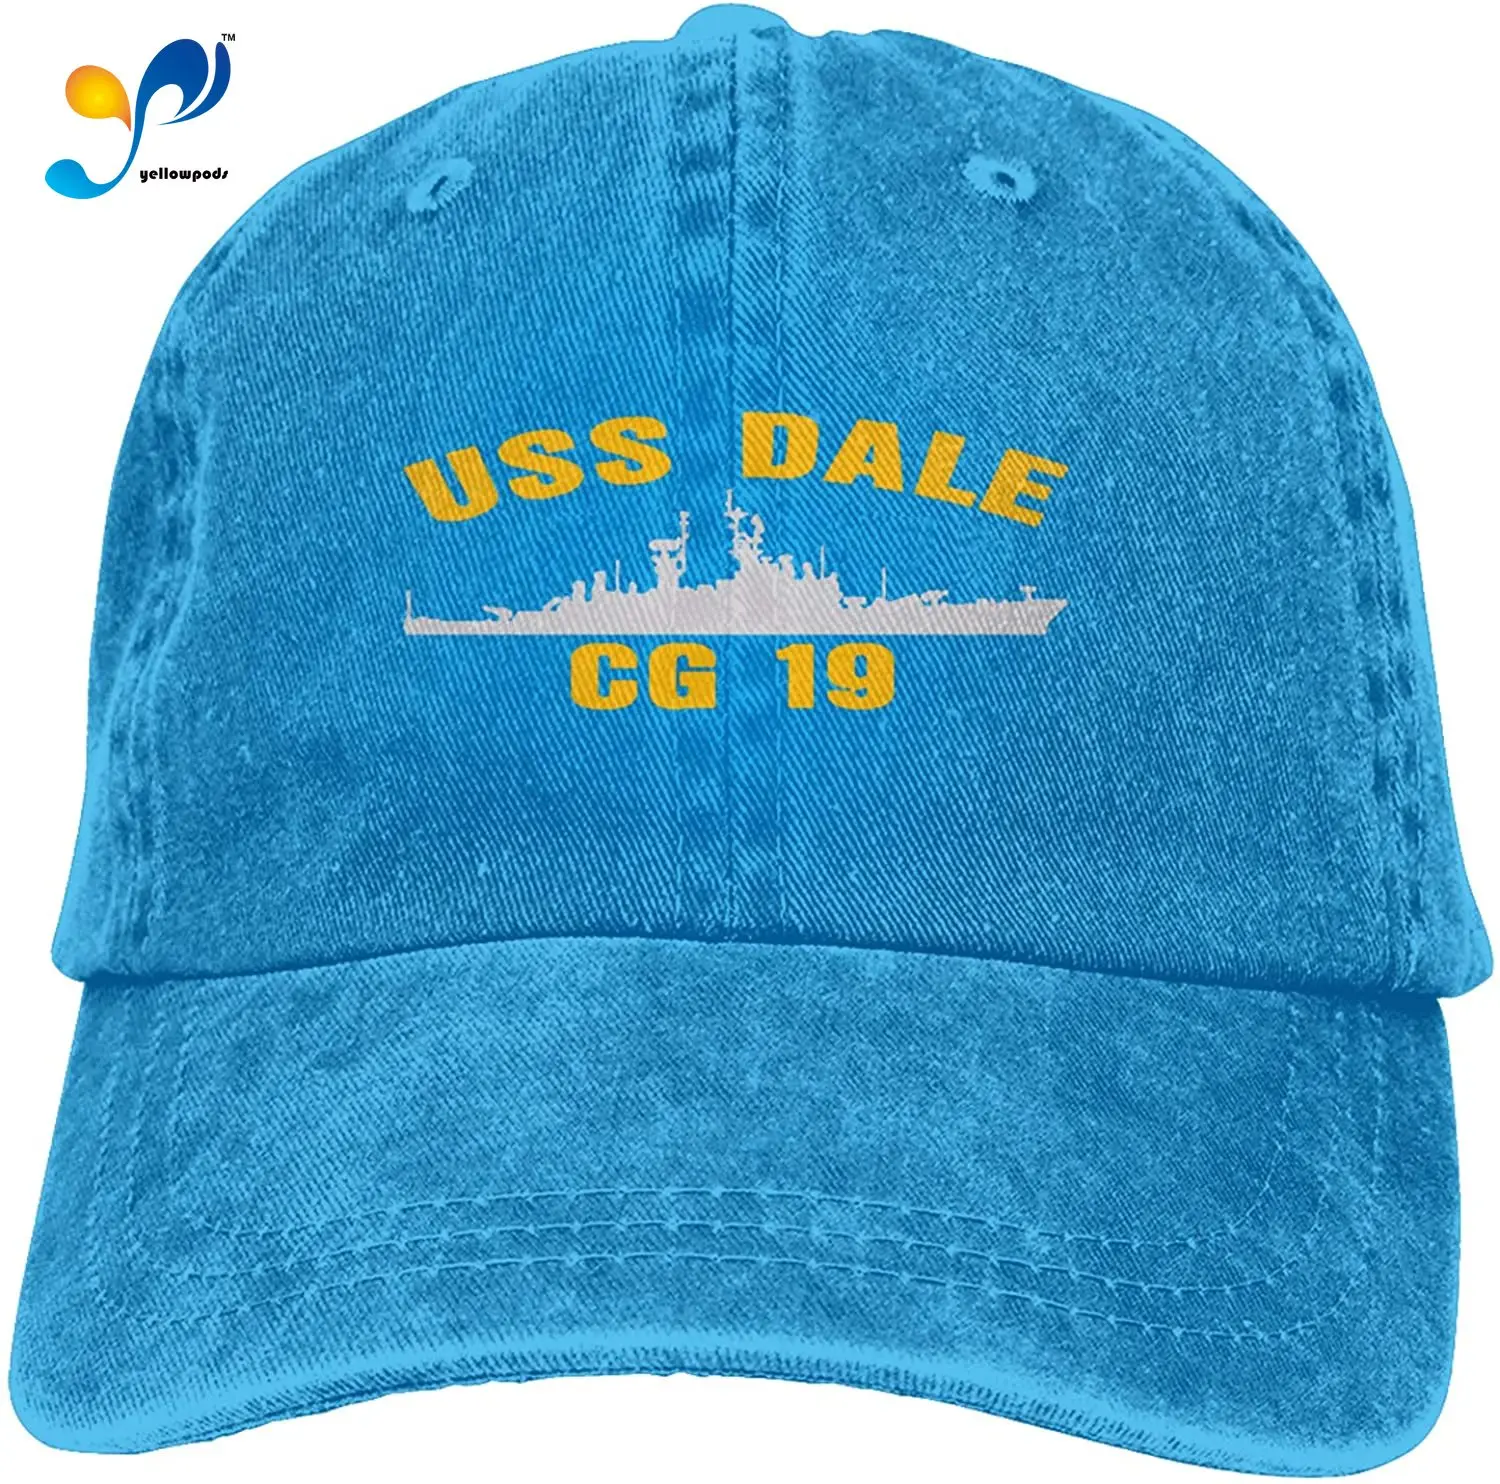 

USS Dale Cg 19 Sandwich Cap Denim Hats Baseball Cap Adult Cowboy Hat